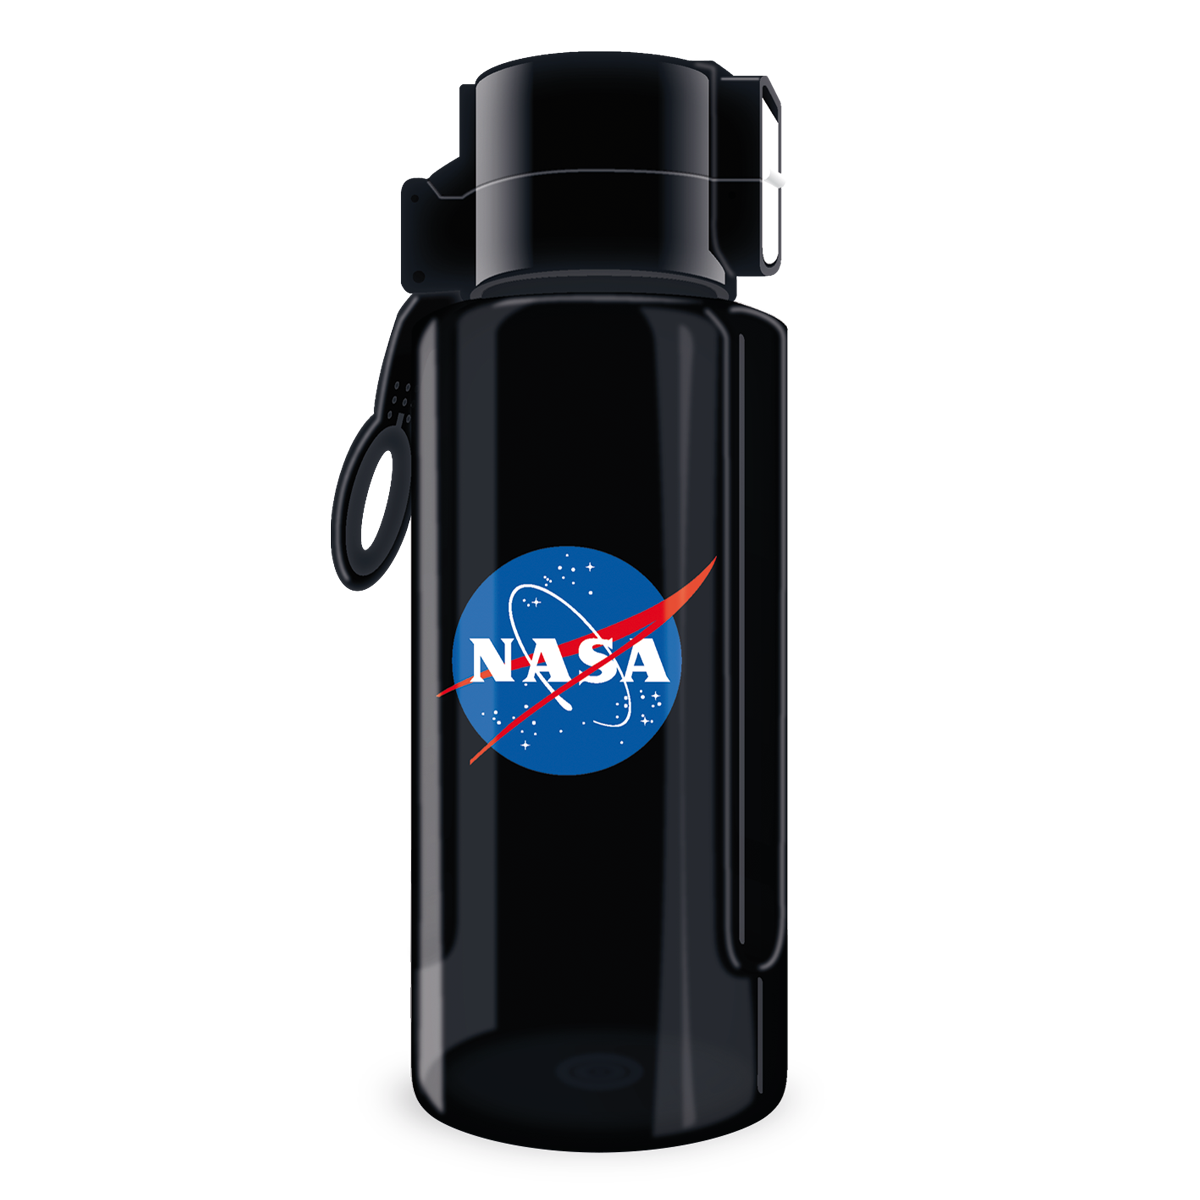 Ars Una NASA kulacs fekete - 650 ml